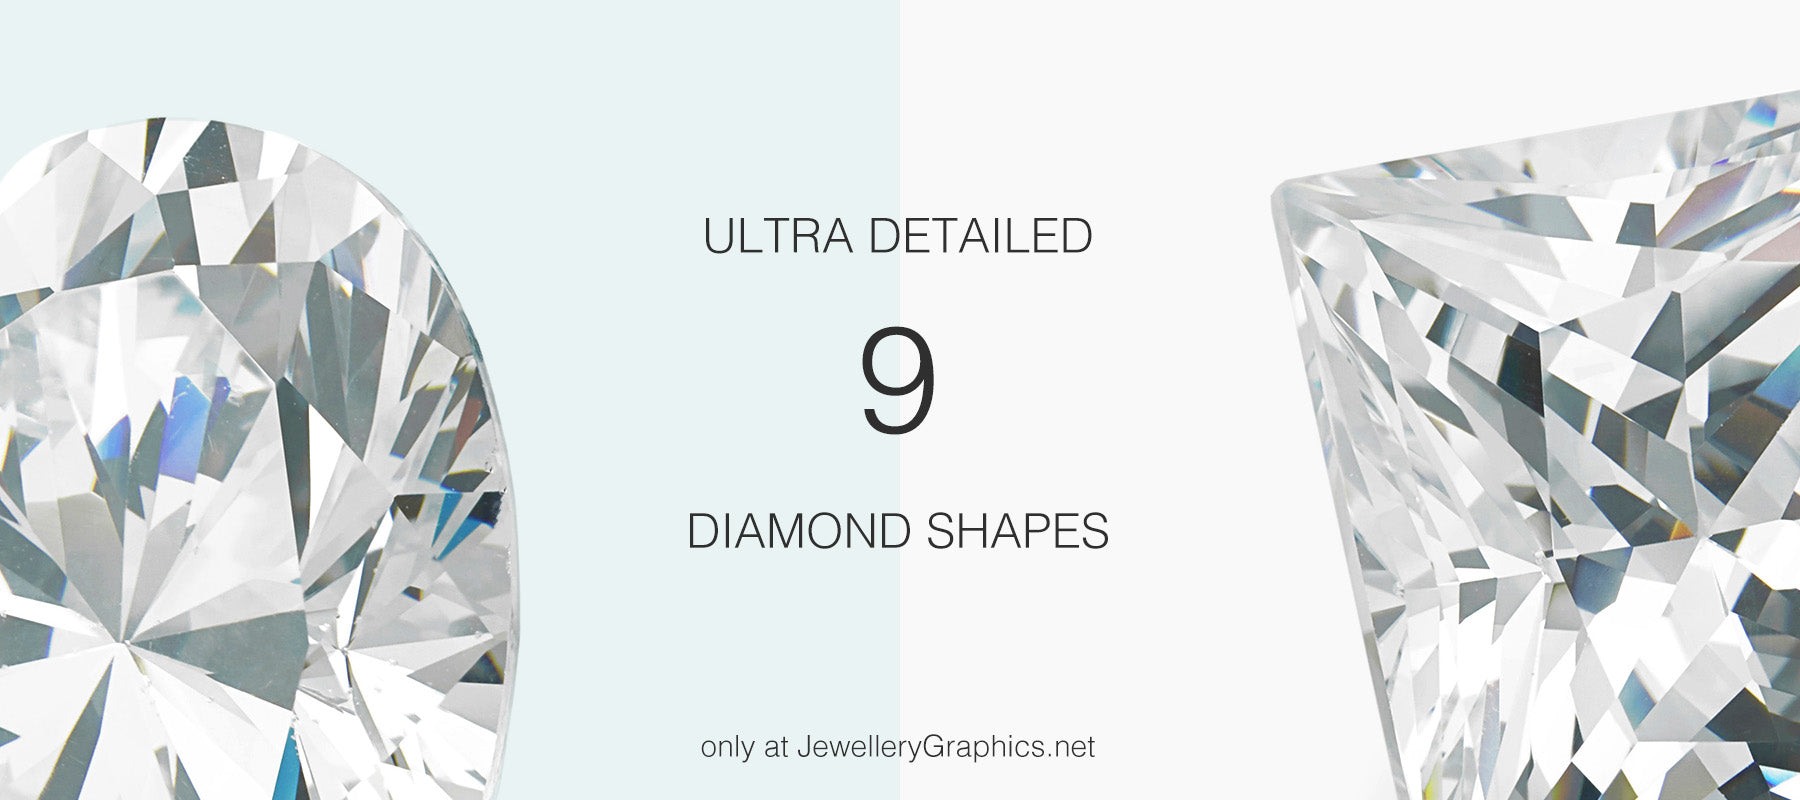 9 detailed diamond photographs